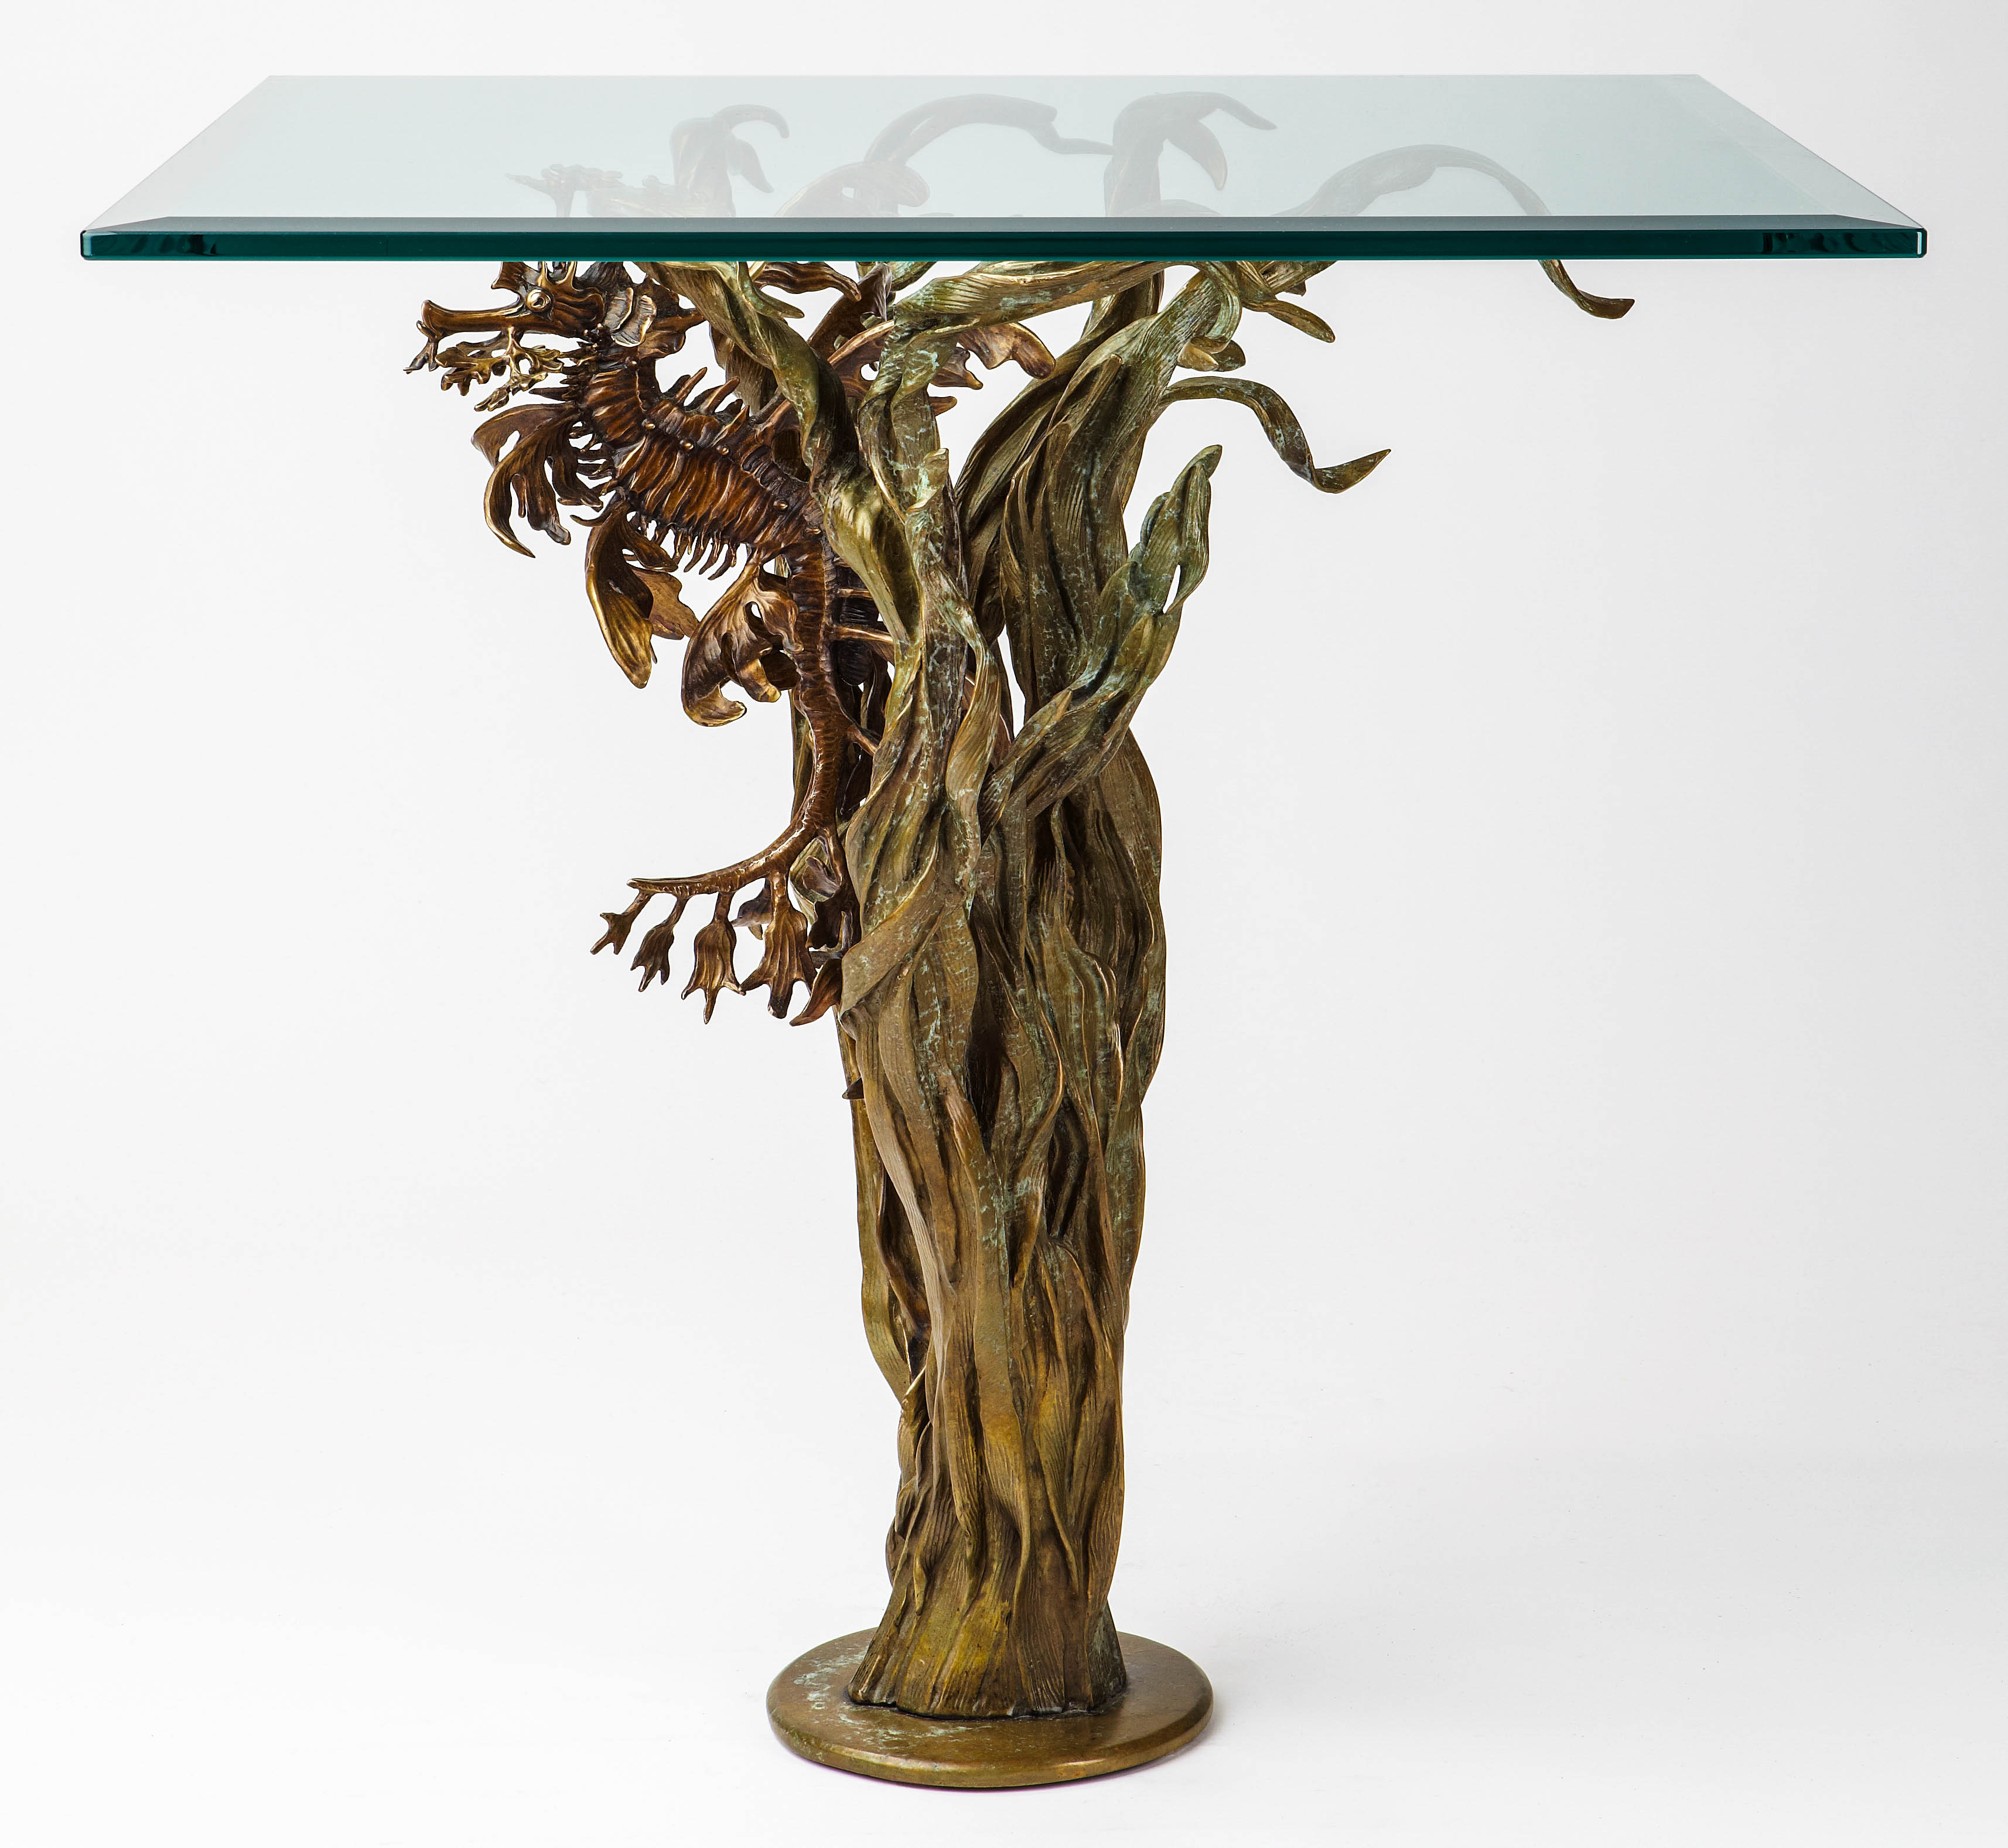 <img src="http://leafy sea dragon_bronze_table_marine life_n.jpg" alt="seahorses">